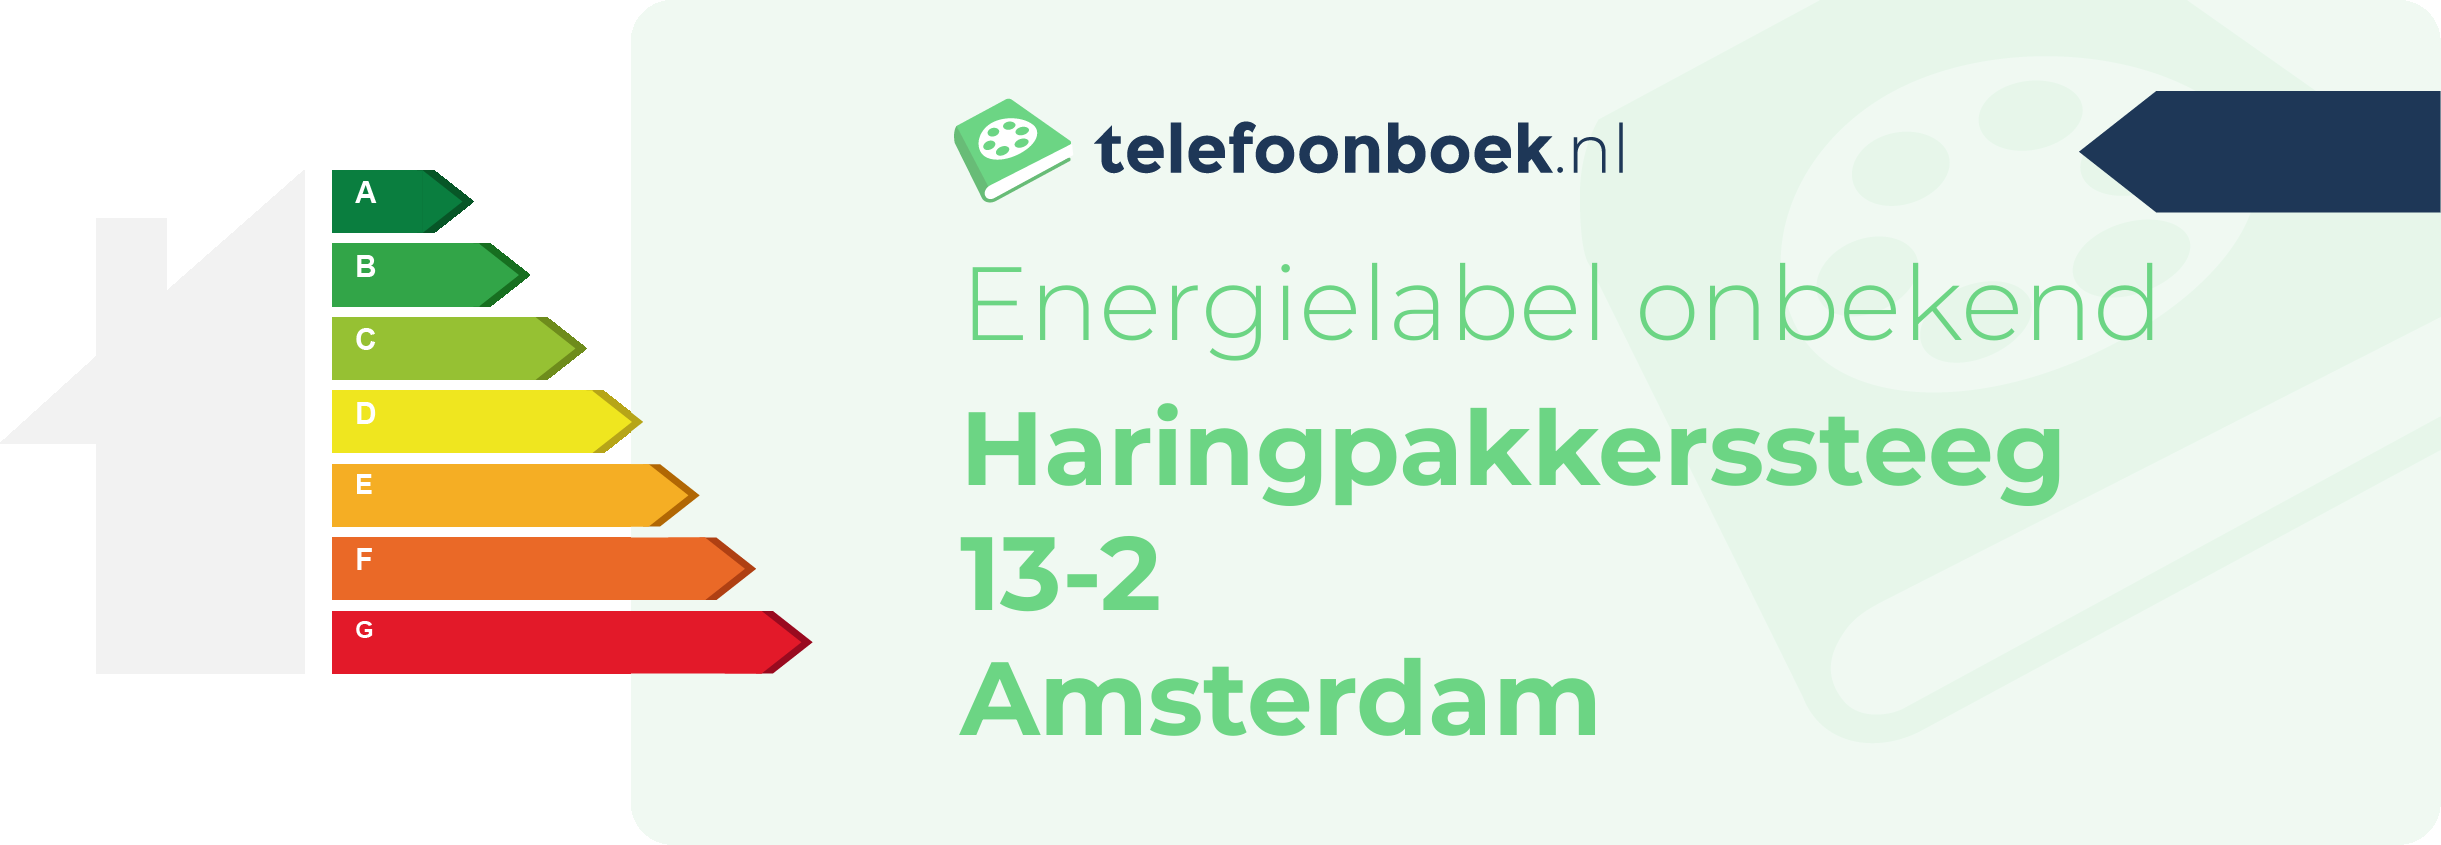 Energielabel Haringpakkerssteeg 13-2 Amsterdam